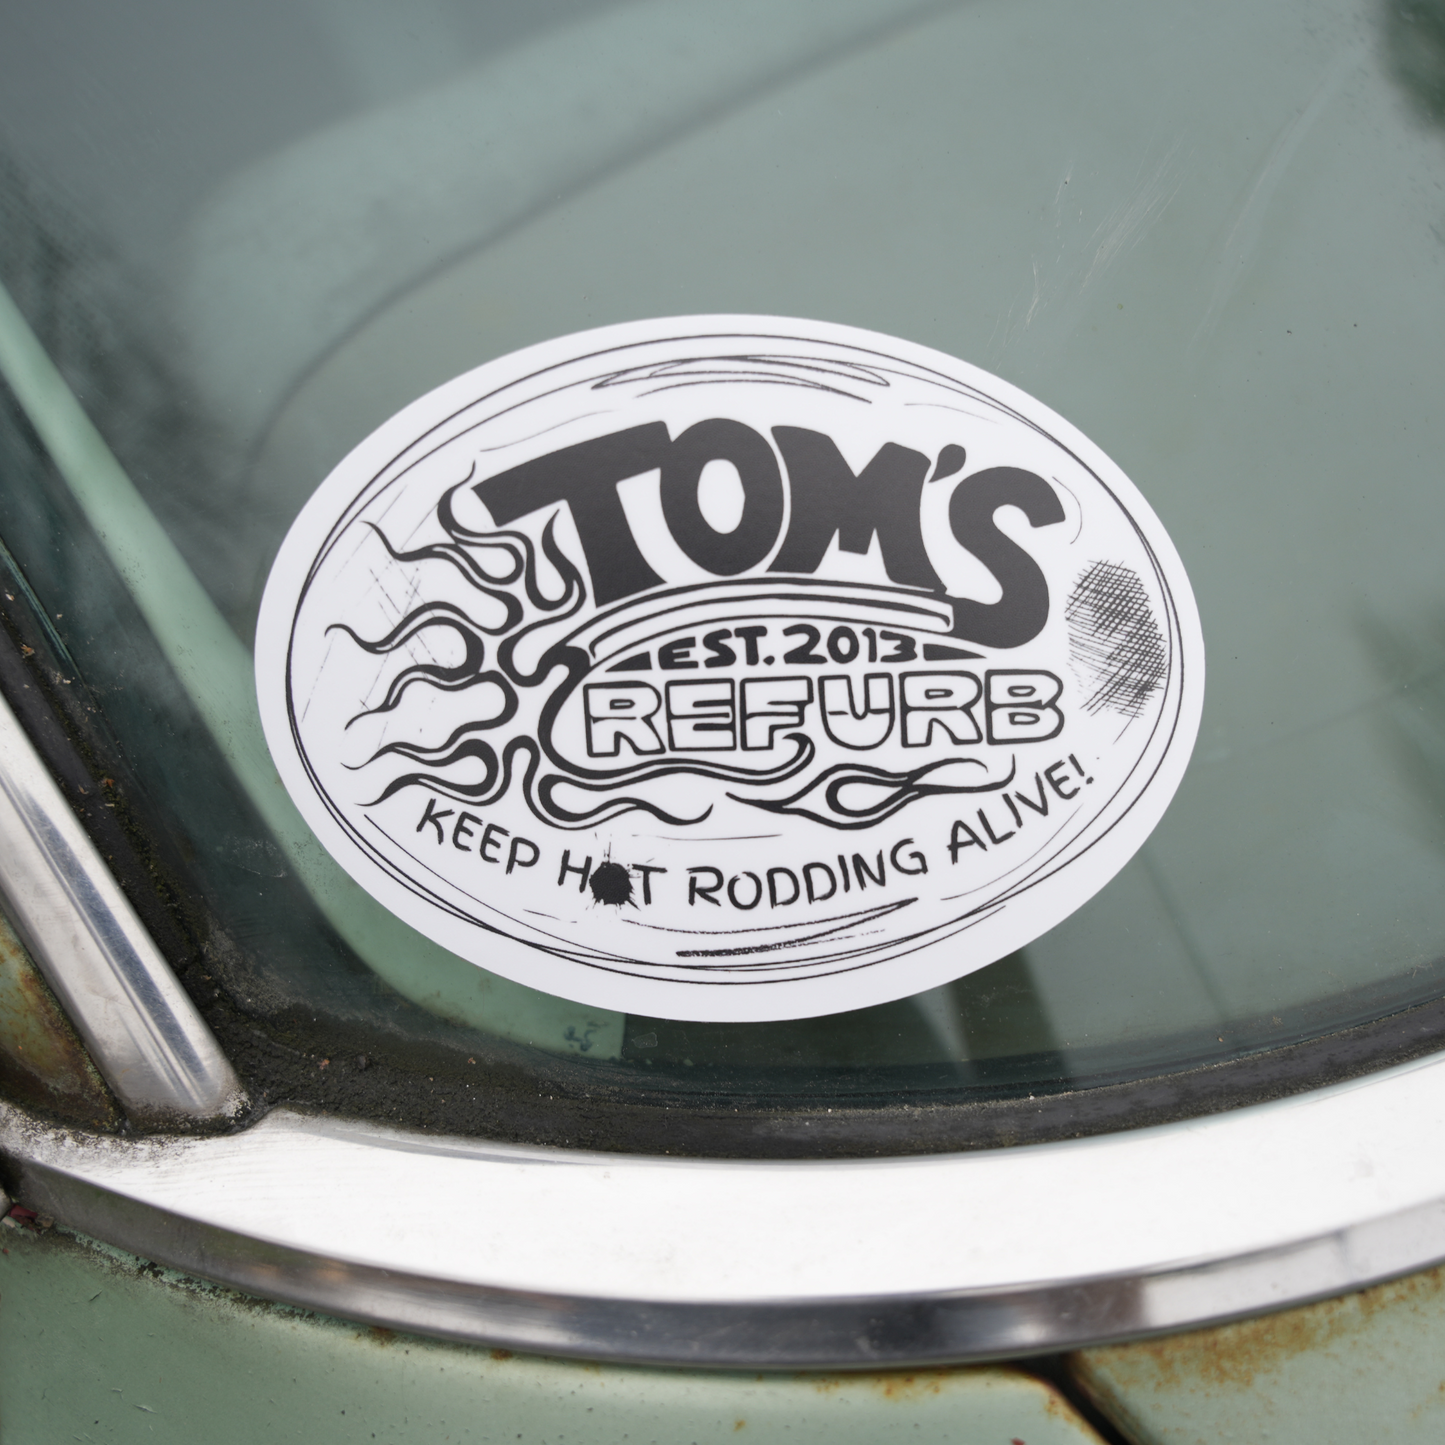 Tom's Refurb Scribble Sticker